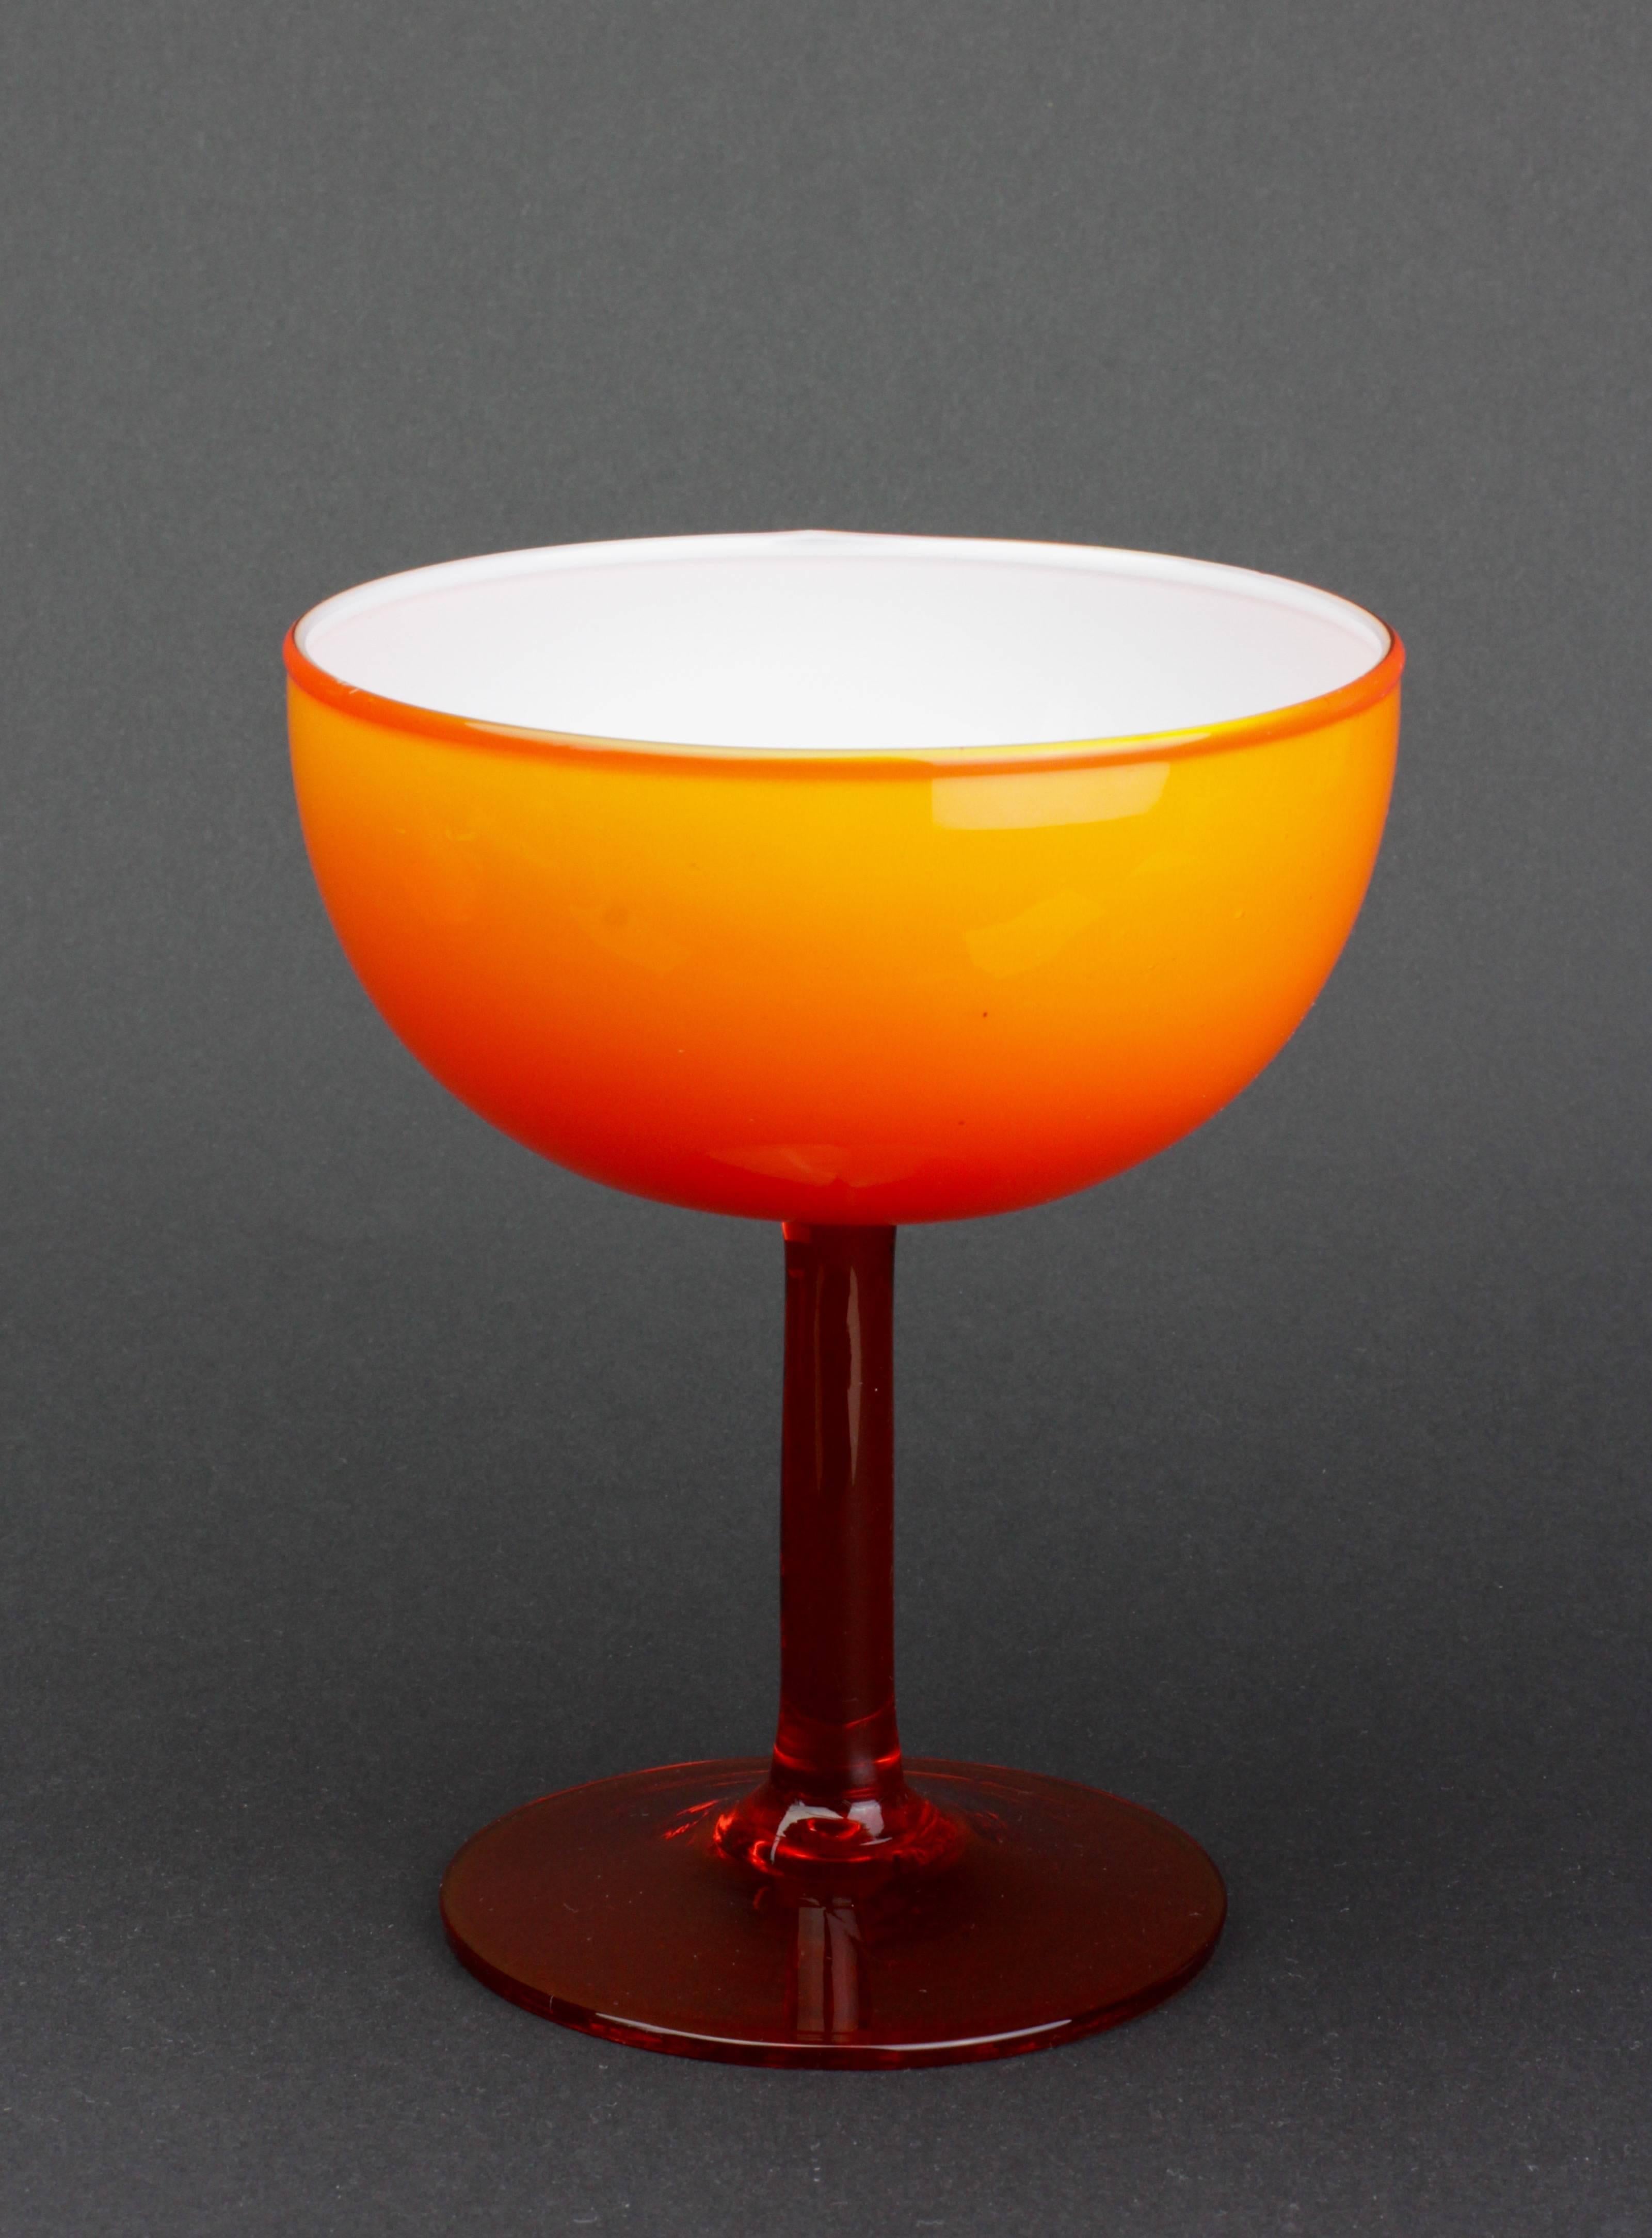 1950s Mid-Century Italian Sweet Jar with Lid in Vibrant Orange over White Glass 1